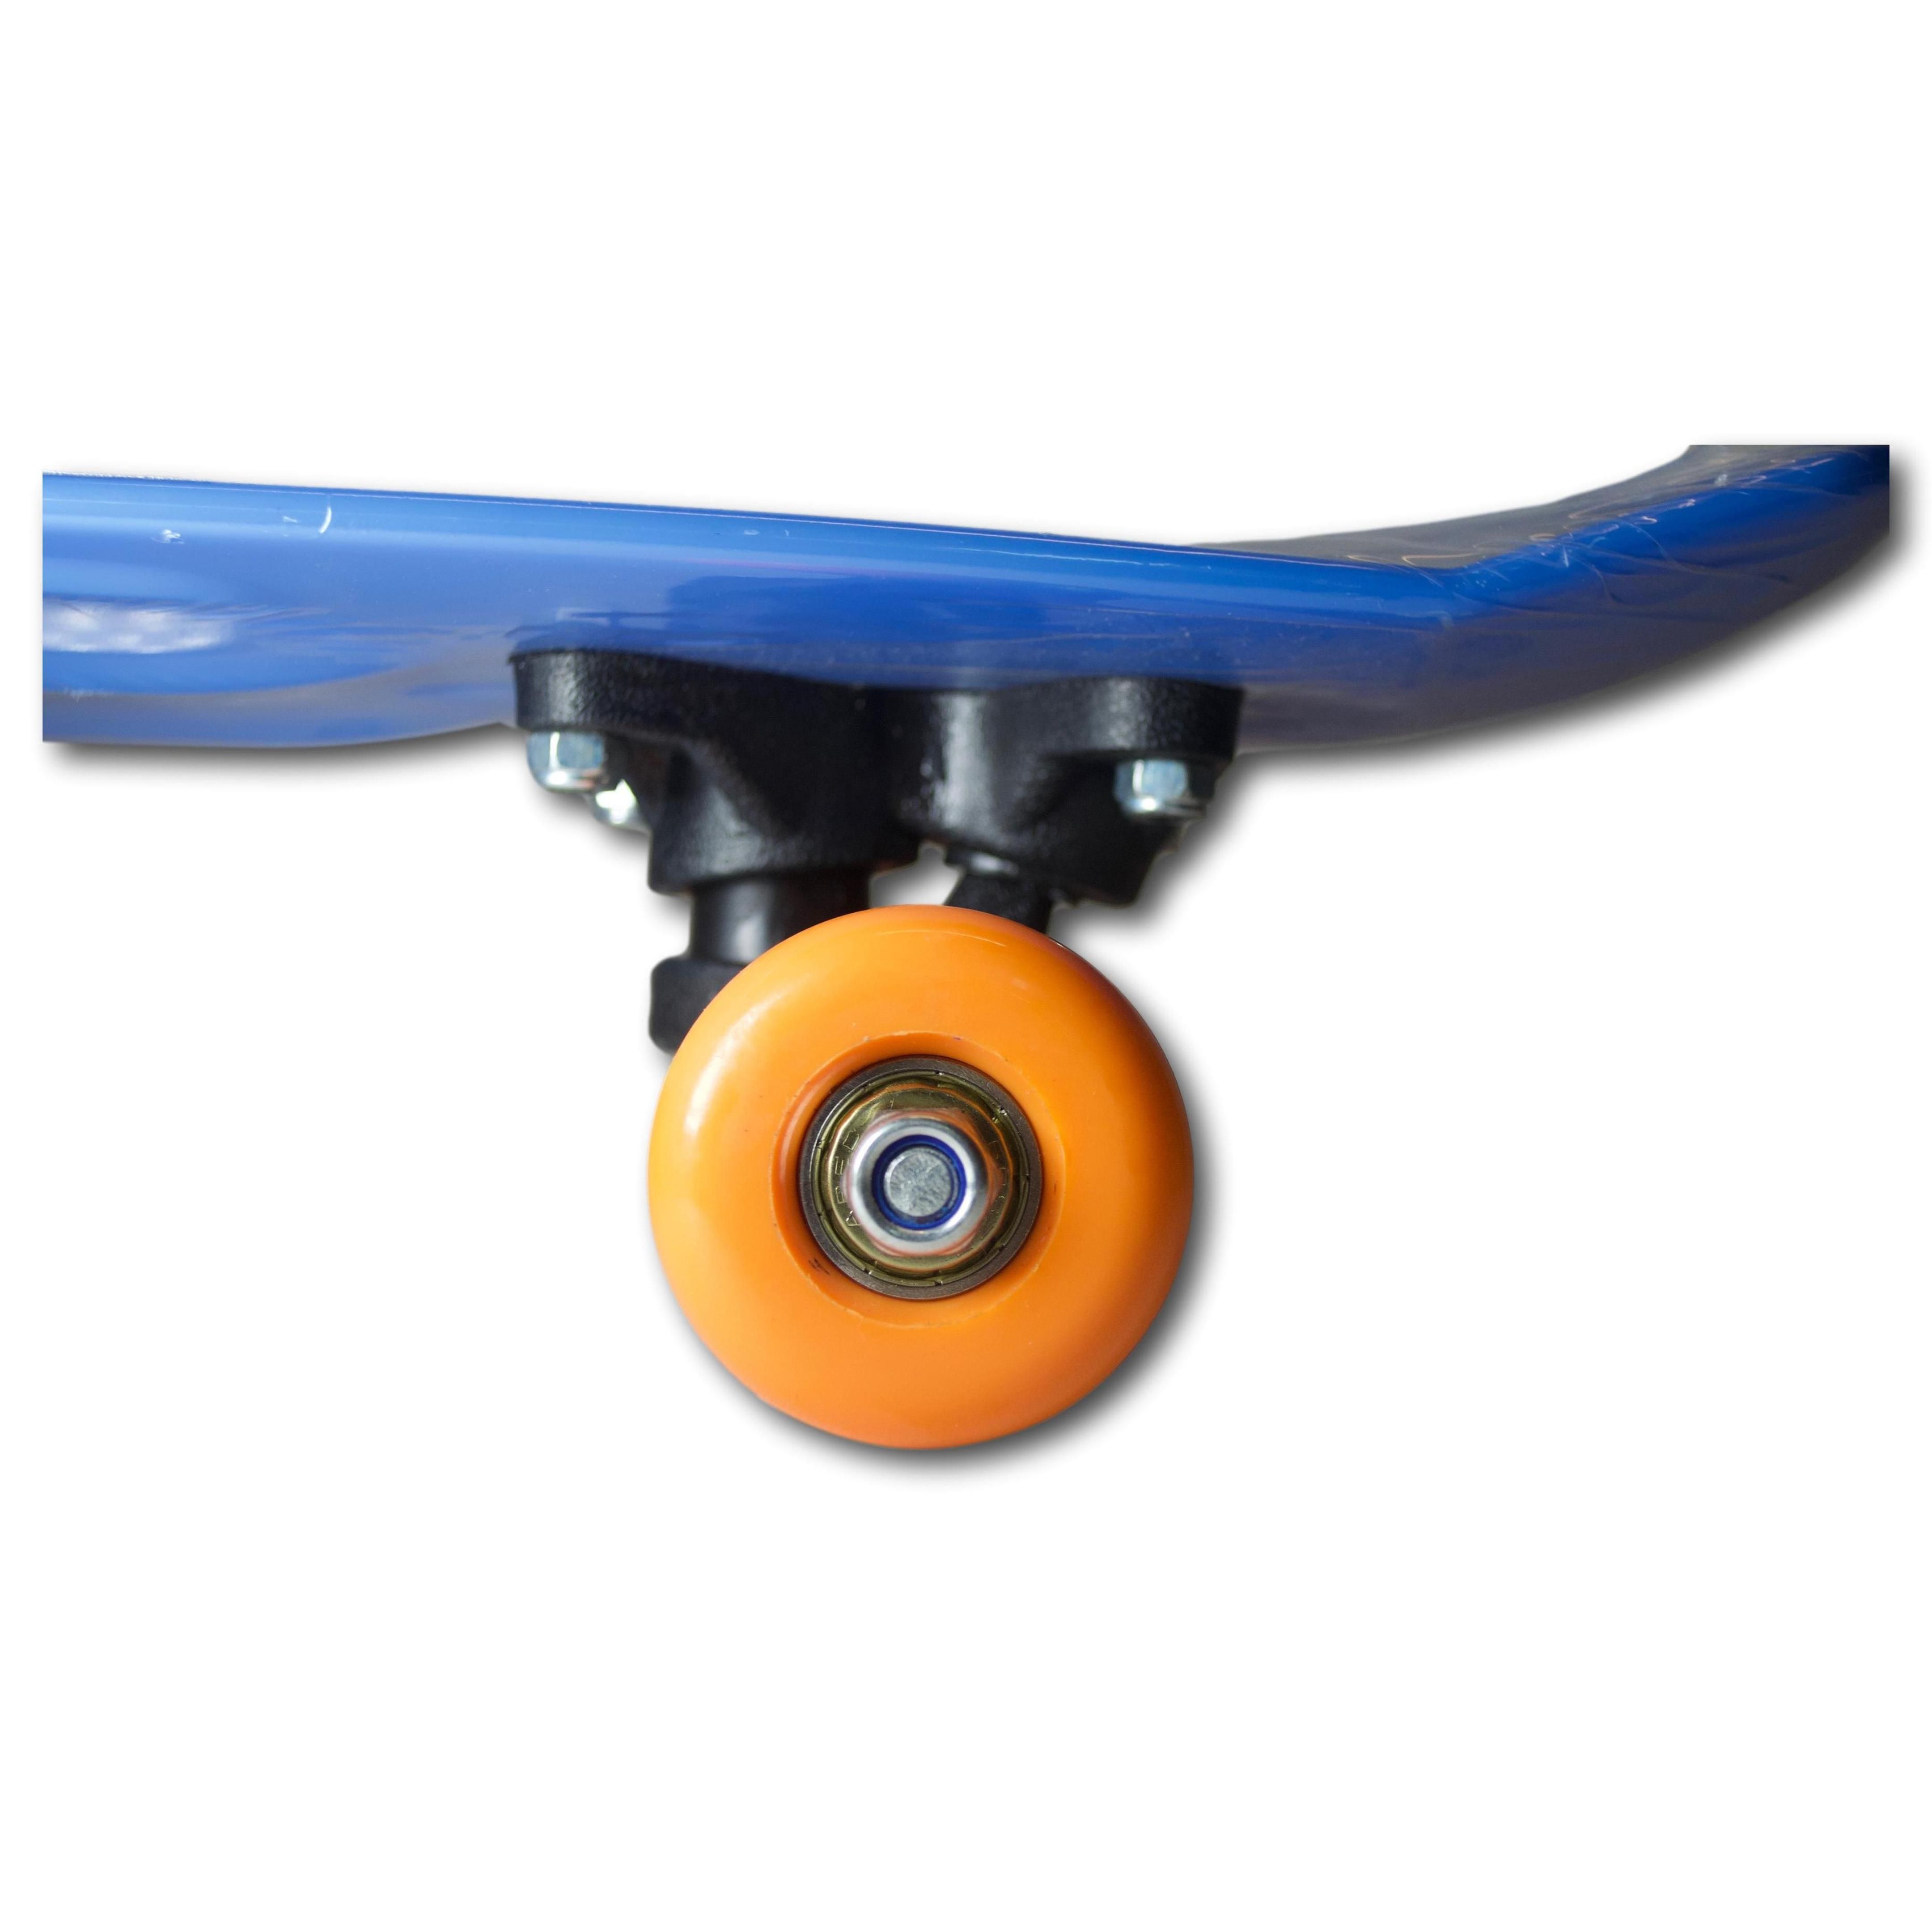 Skateboard de PVC Infantil INDIGO 43,18 * 12,7 cm Rosa